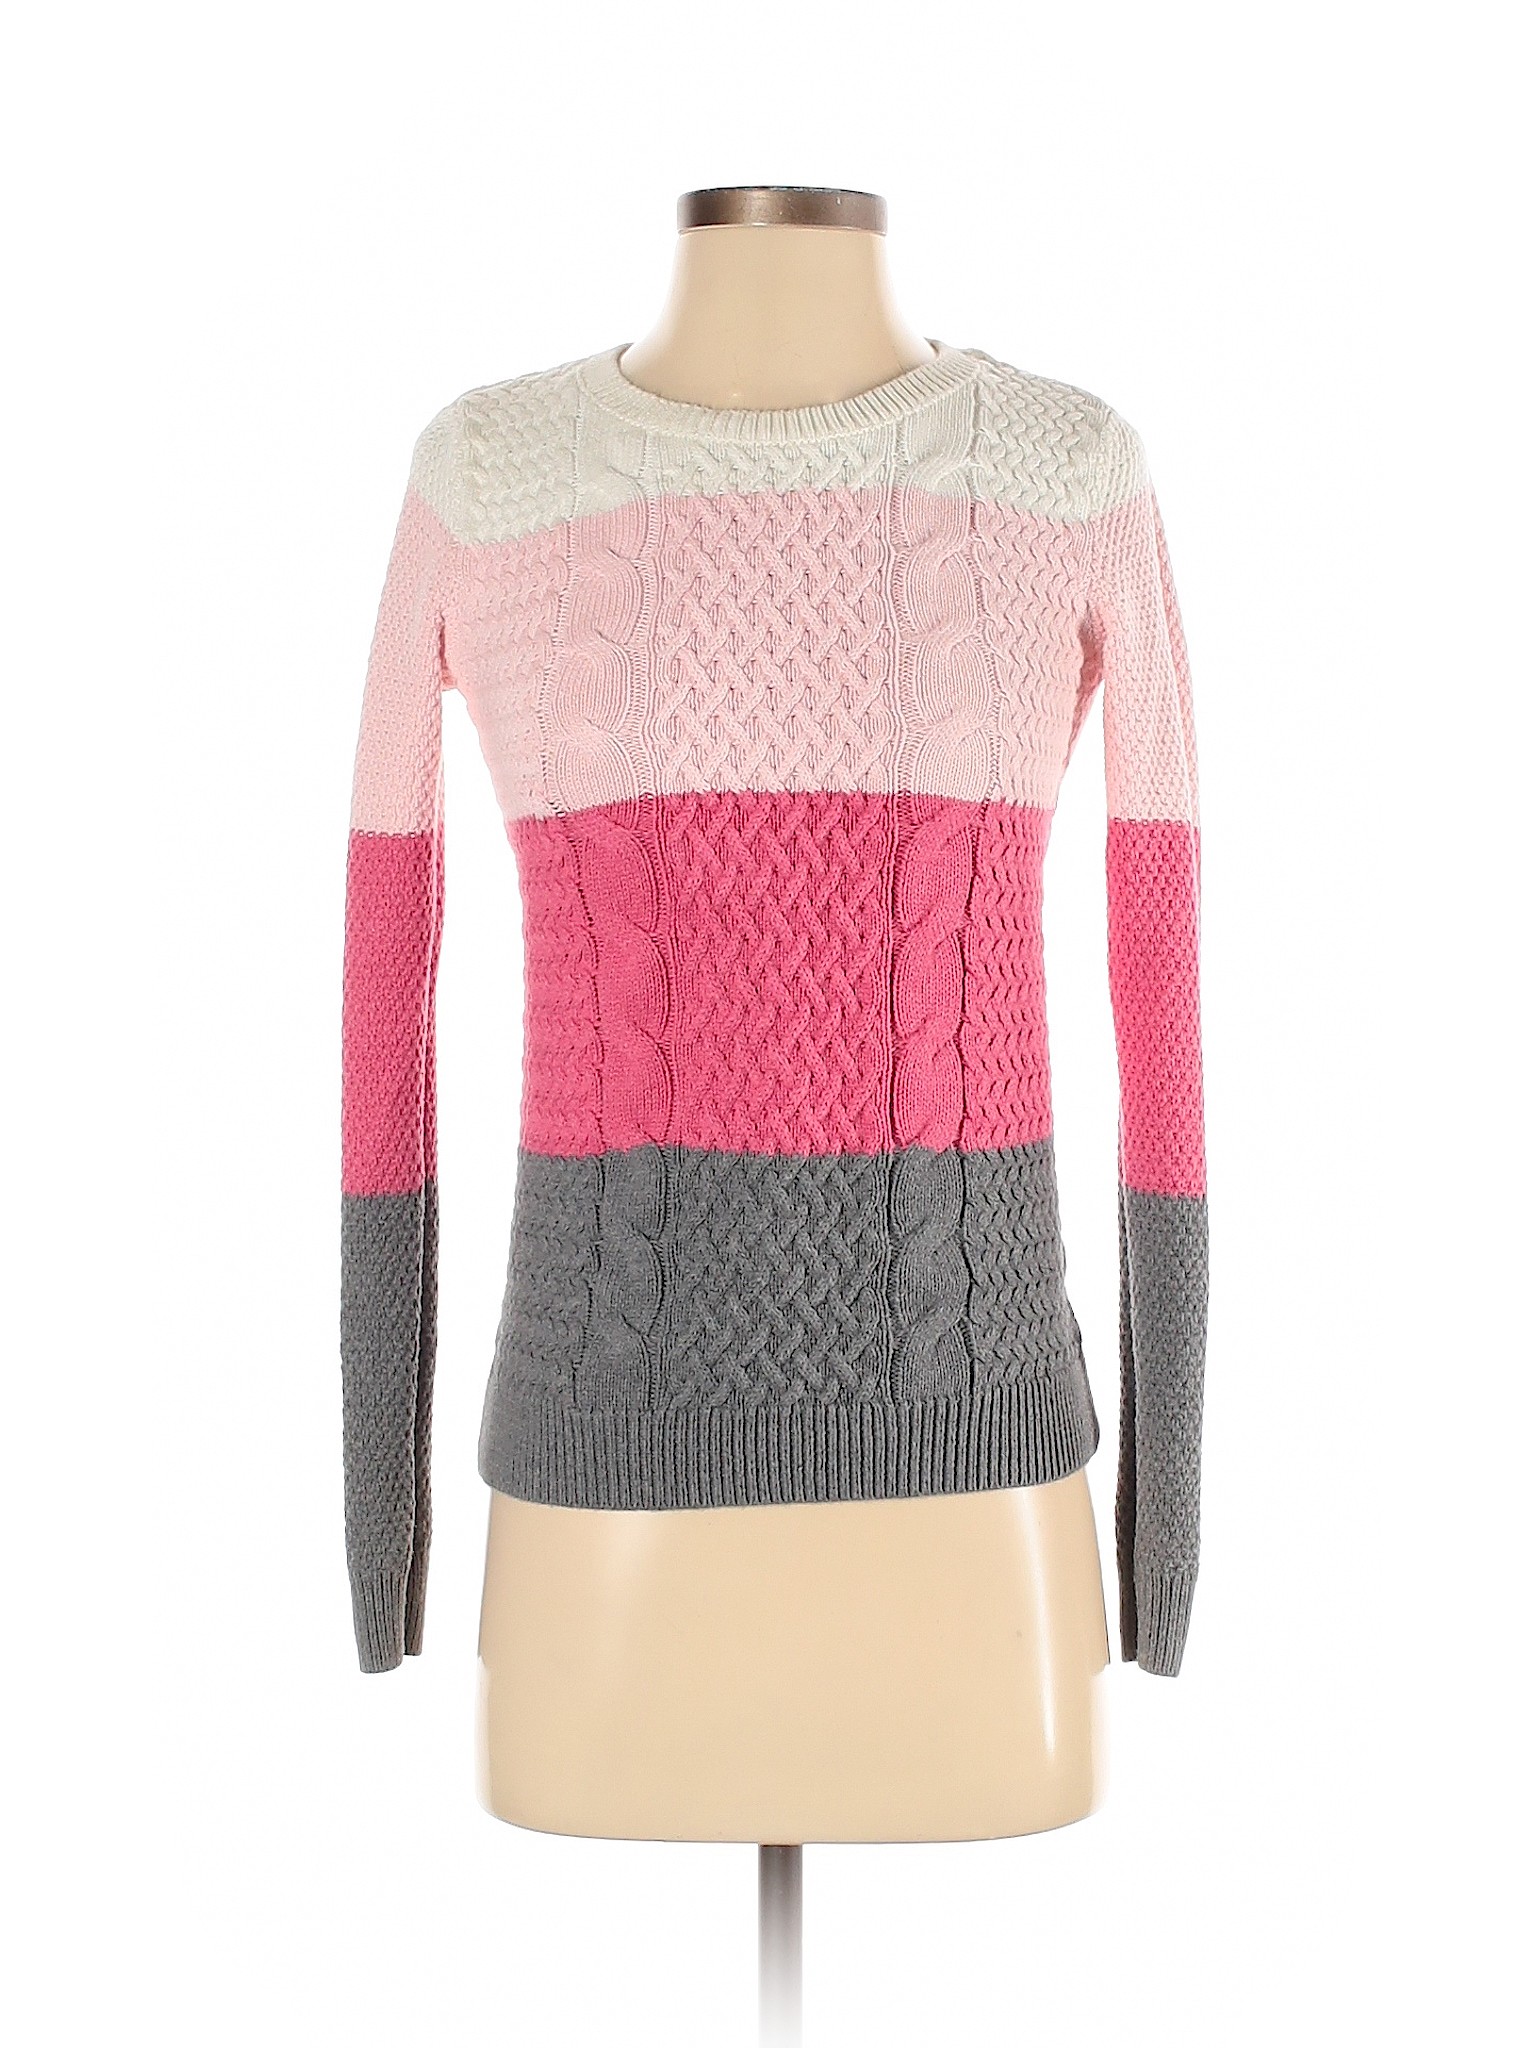 Club Monaco Women Pink Pullover Sweater XS | eBay